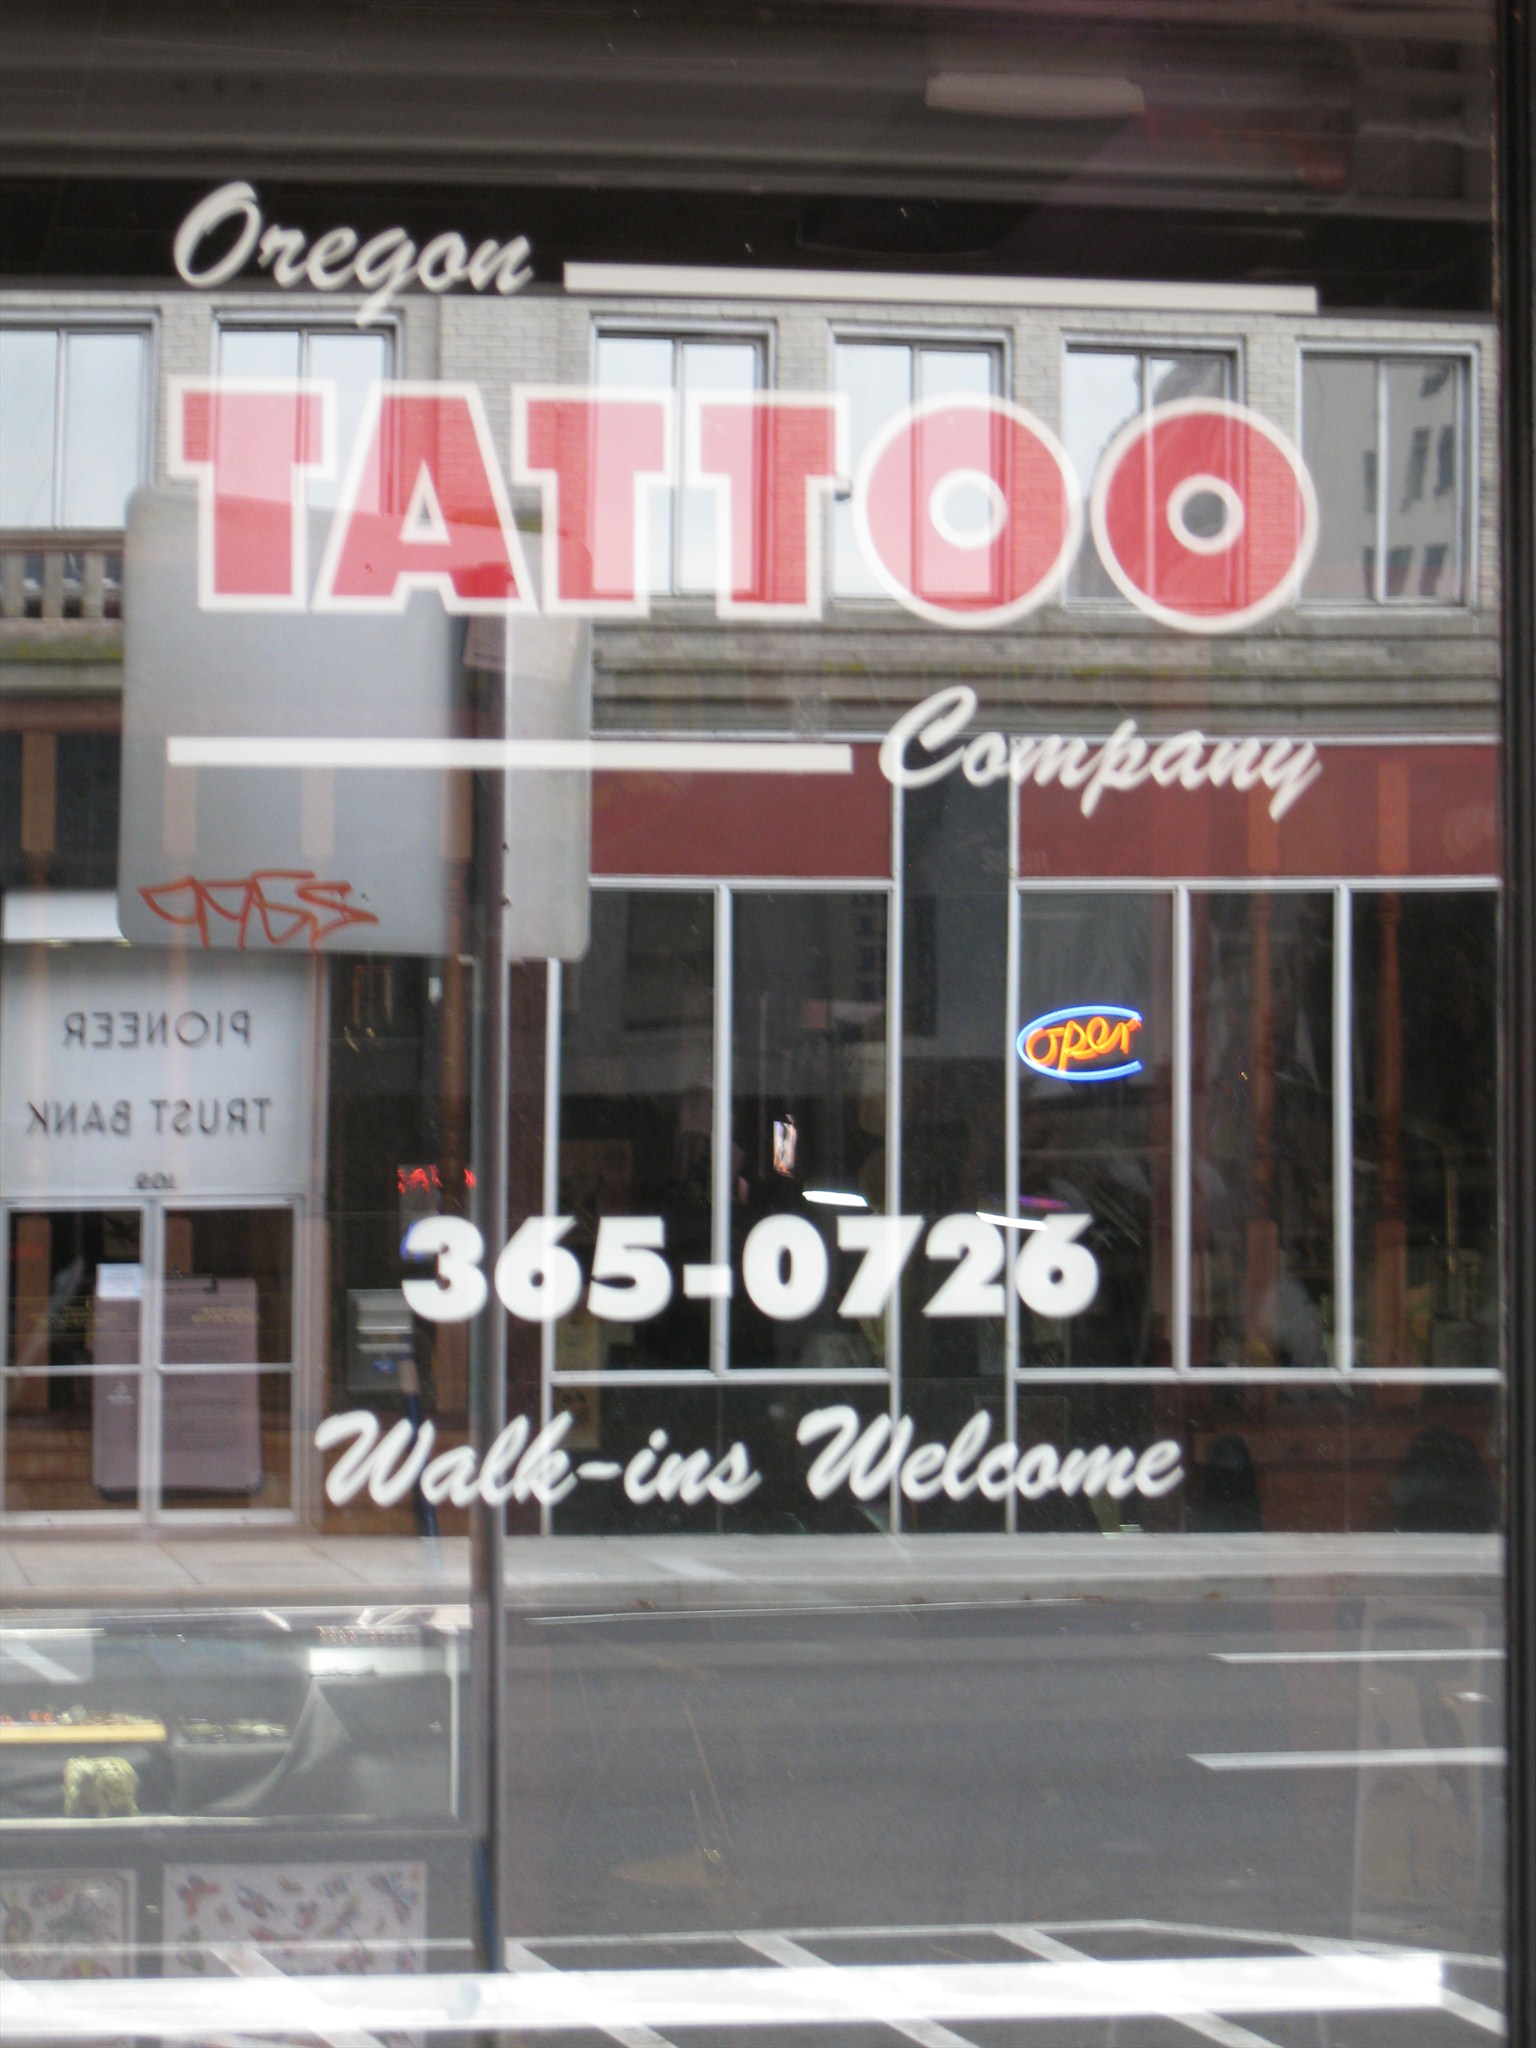 Oregon Tattoo Company Salem, Oregon Tattoo Shops